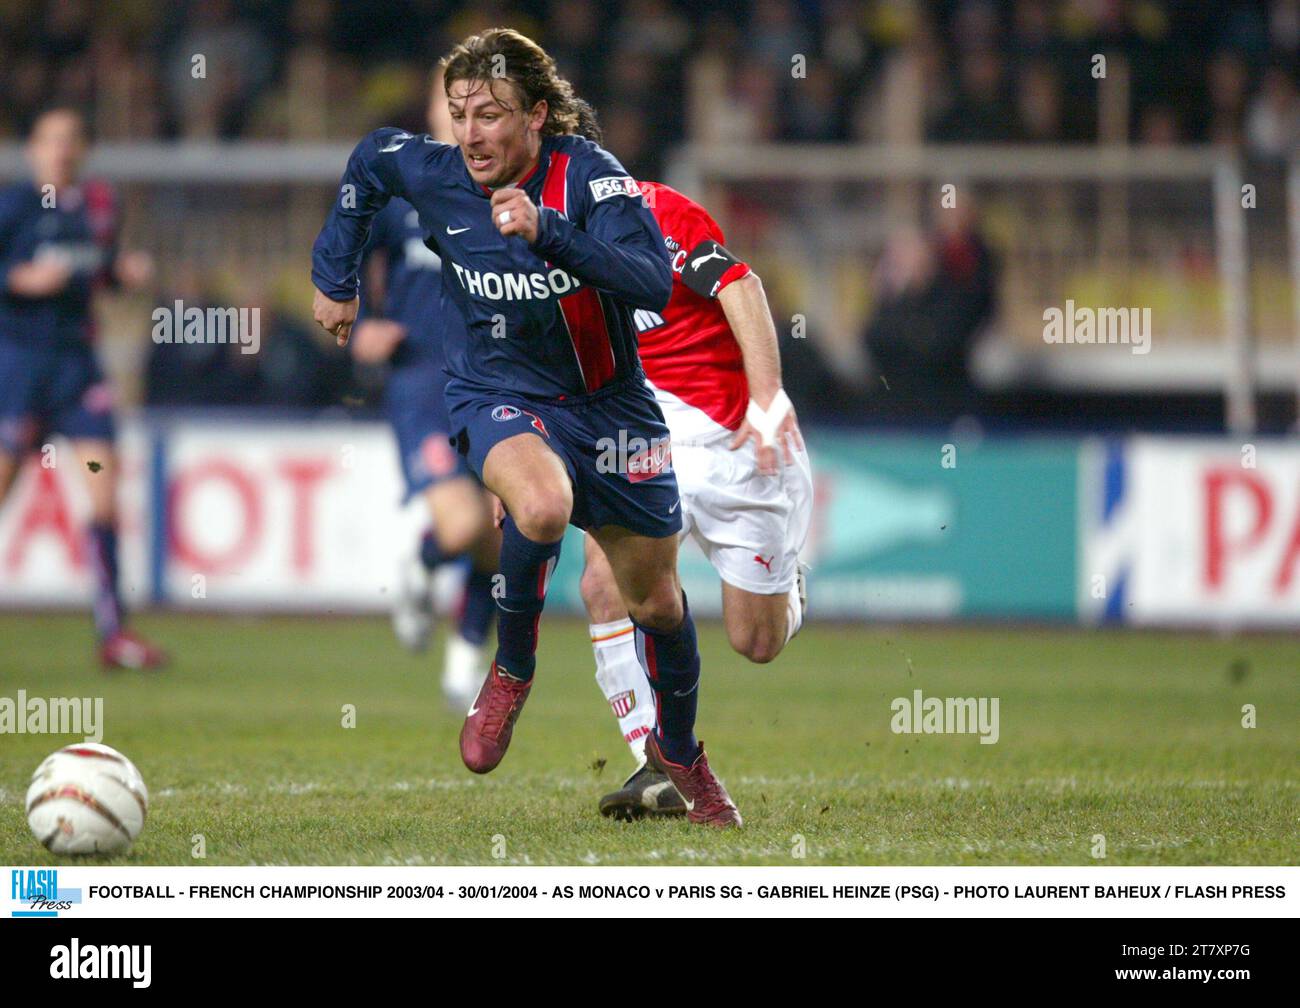 FOOTBALL - FRENCH CHAMPIONSHIP 2003/04 - 30/01/2004 - AS MONACO v PARIS SG - GABRIEL HEINZE (PSG) - PHOTO LAURENT BAHEUX / FLASH PRESS Stock Photo